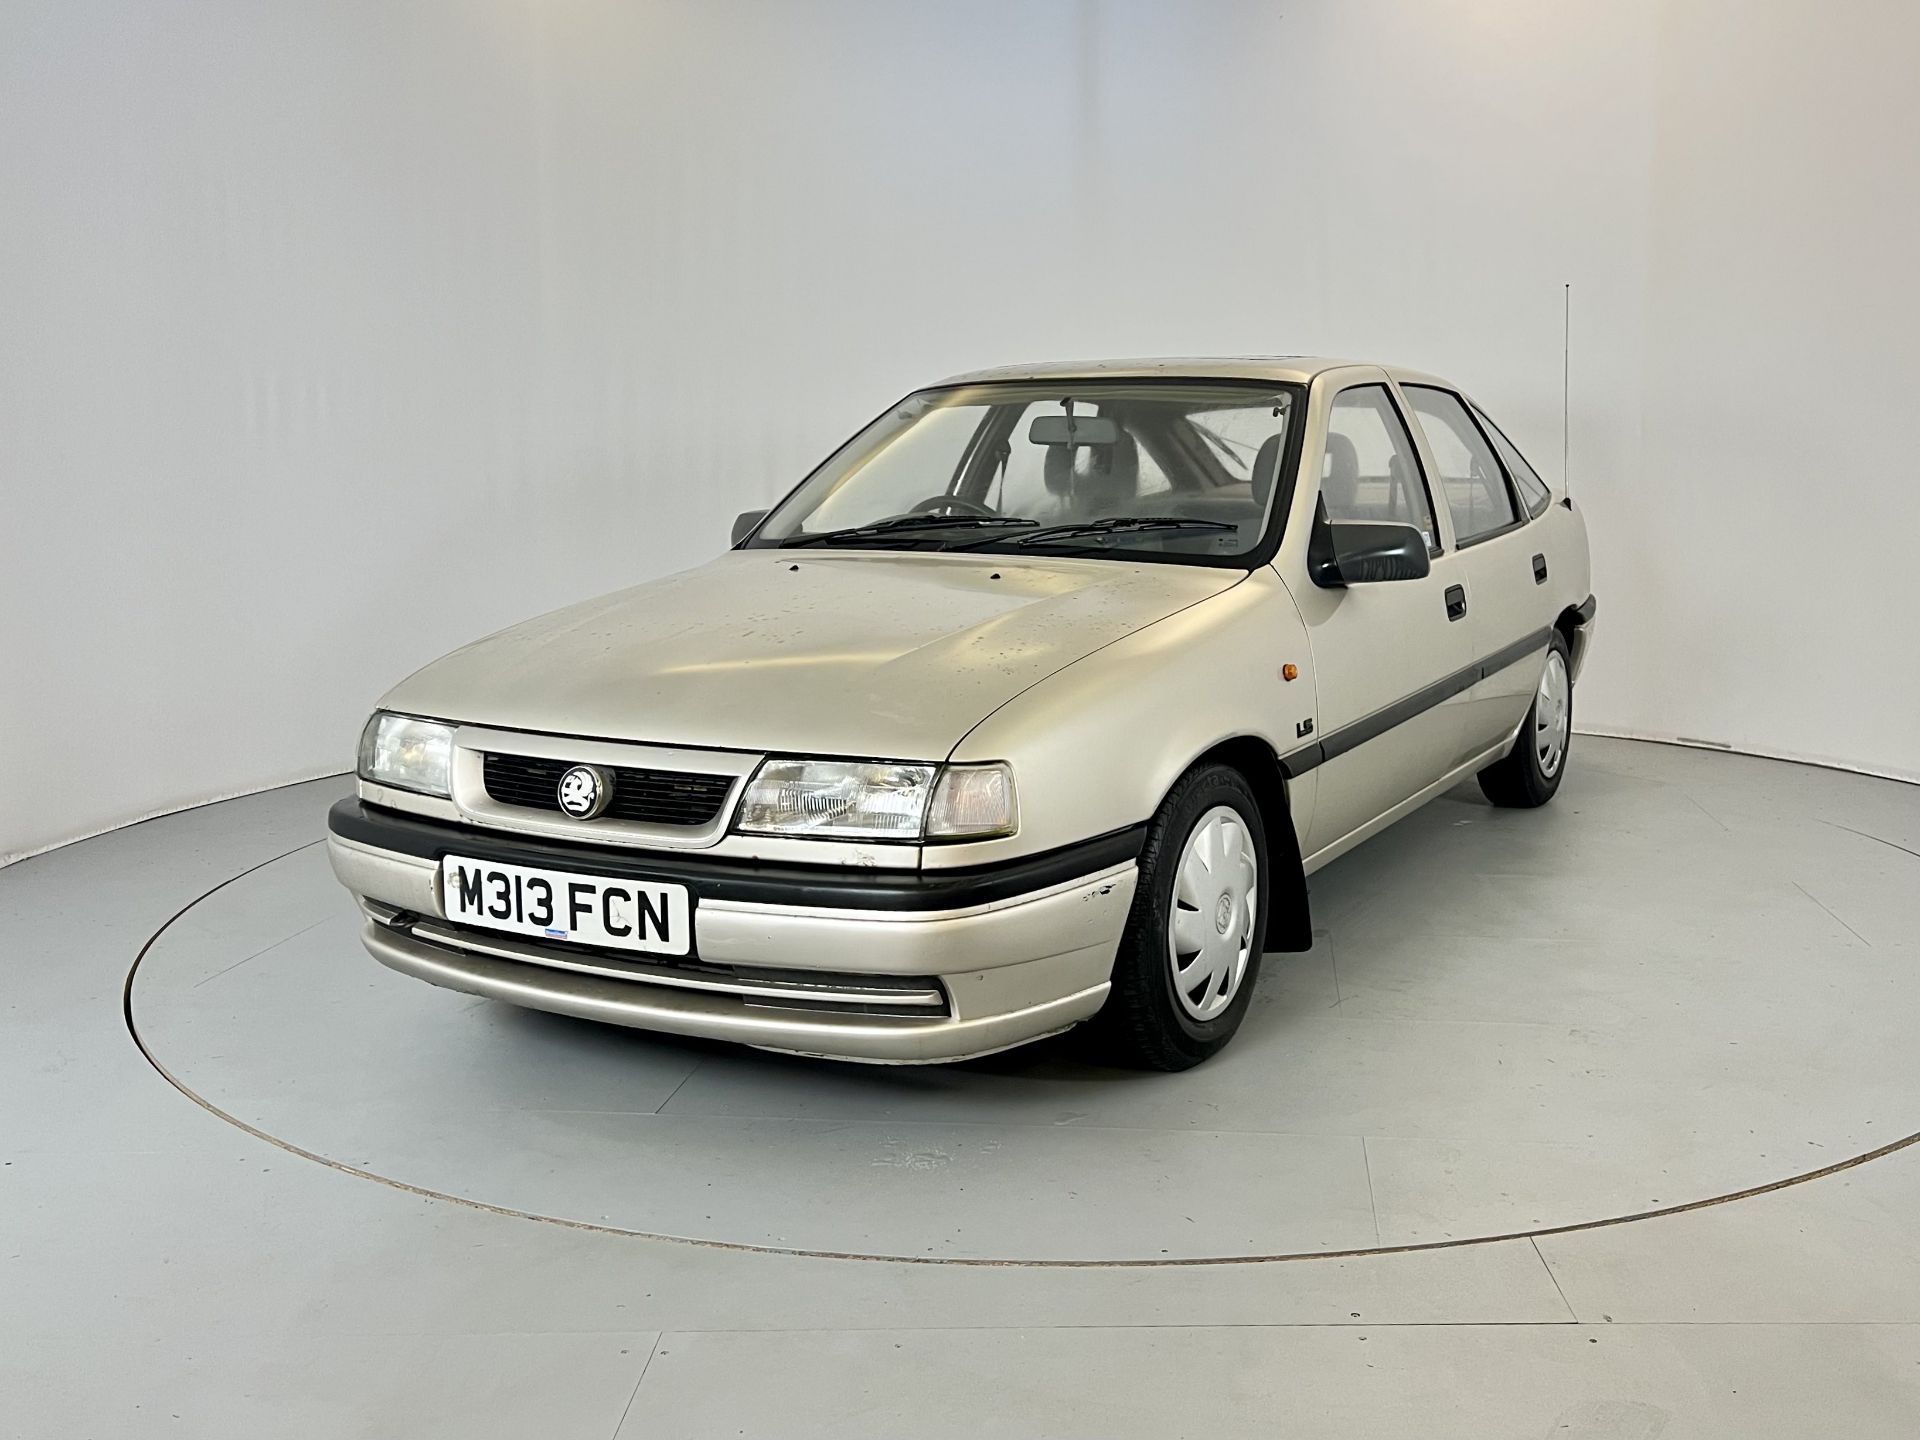 Vauxhall Cavalier - Image 3 of 33